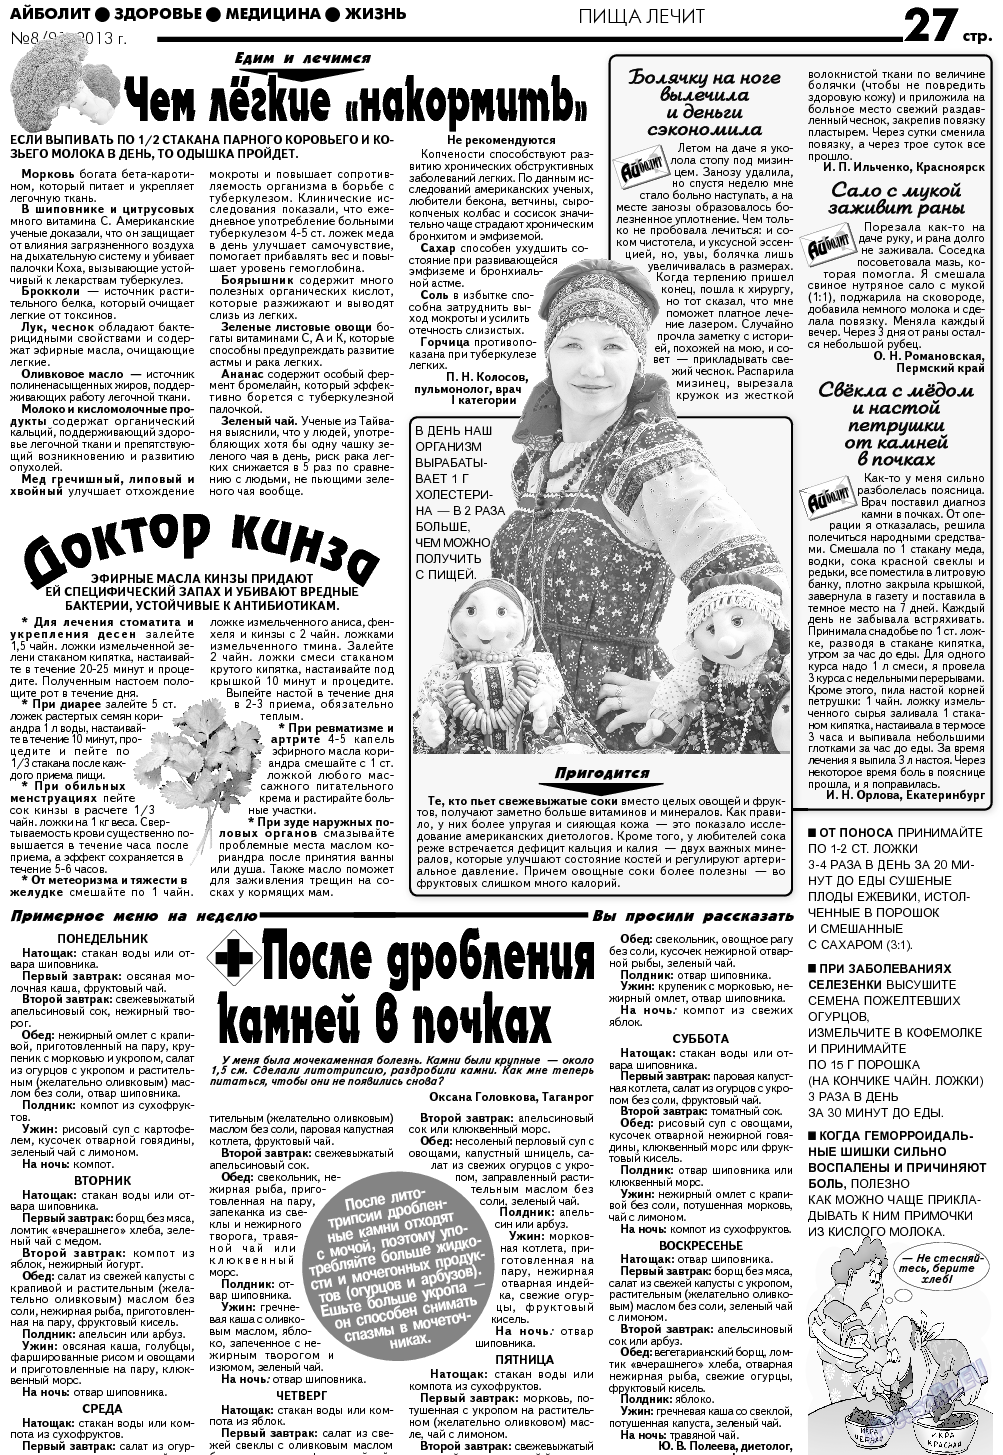 АйБолит (газета). 2013 год, номер 8, стр. 27